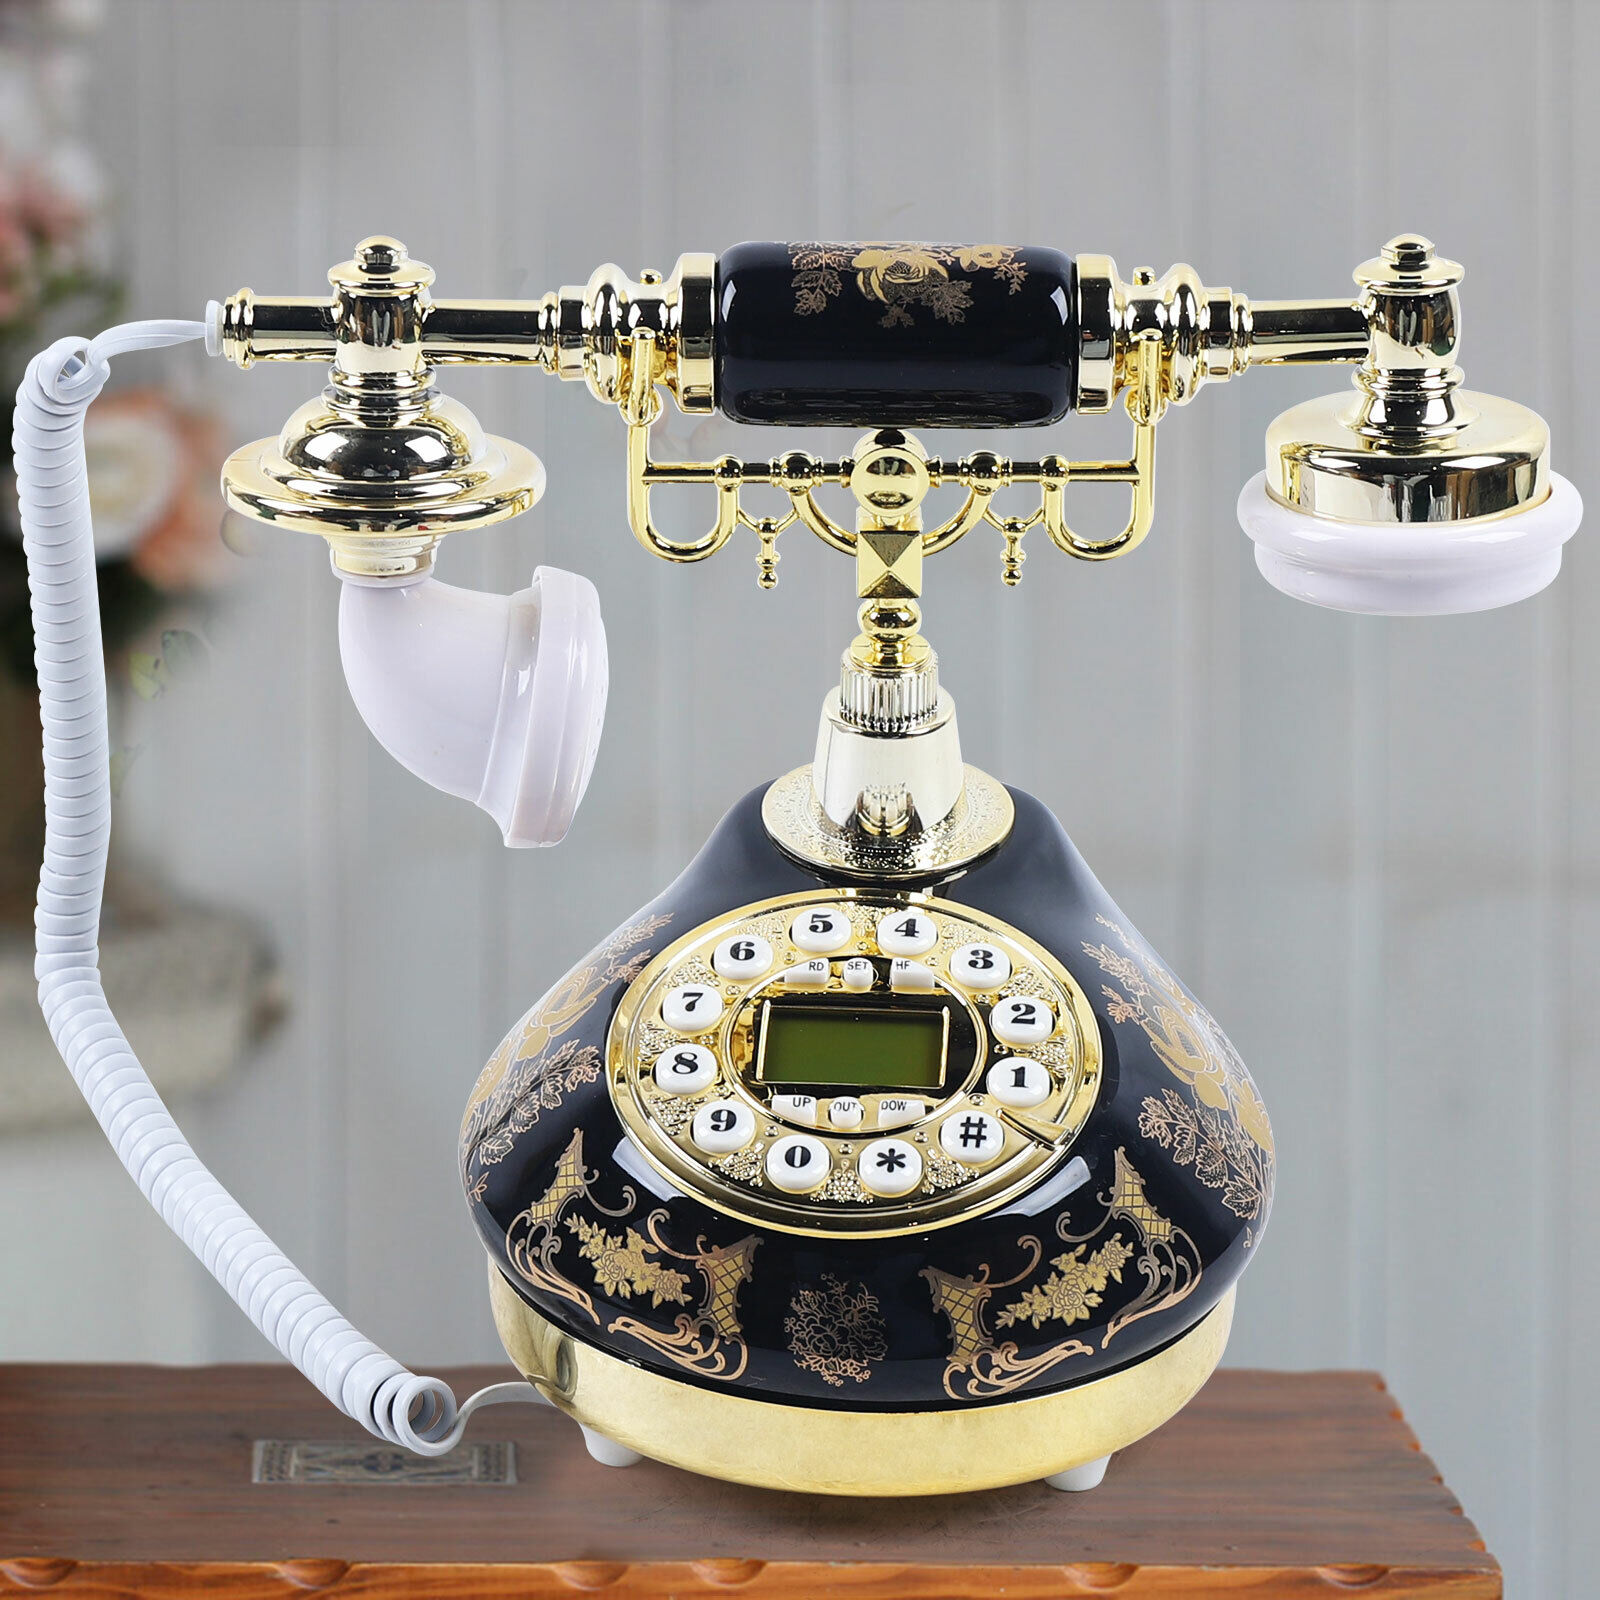 European/Retro Style Landline Phone for Home Office Vintage Telephone Equipment